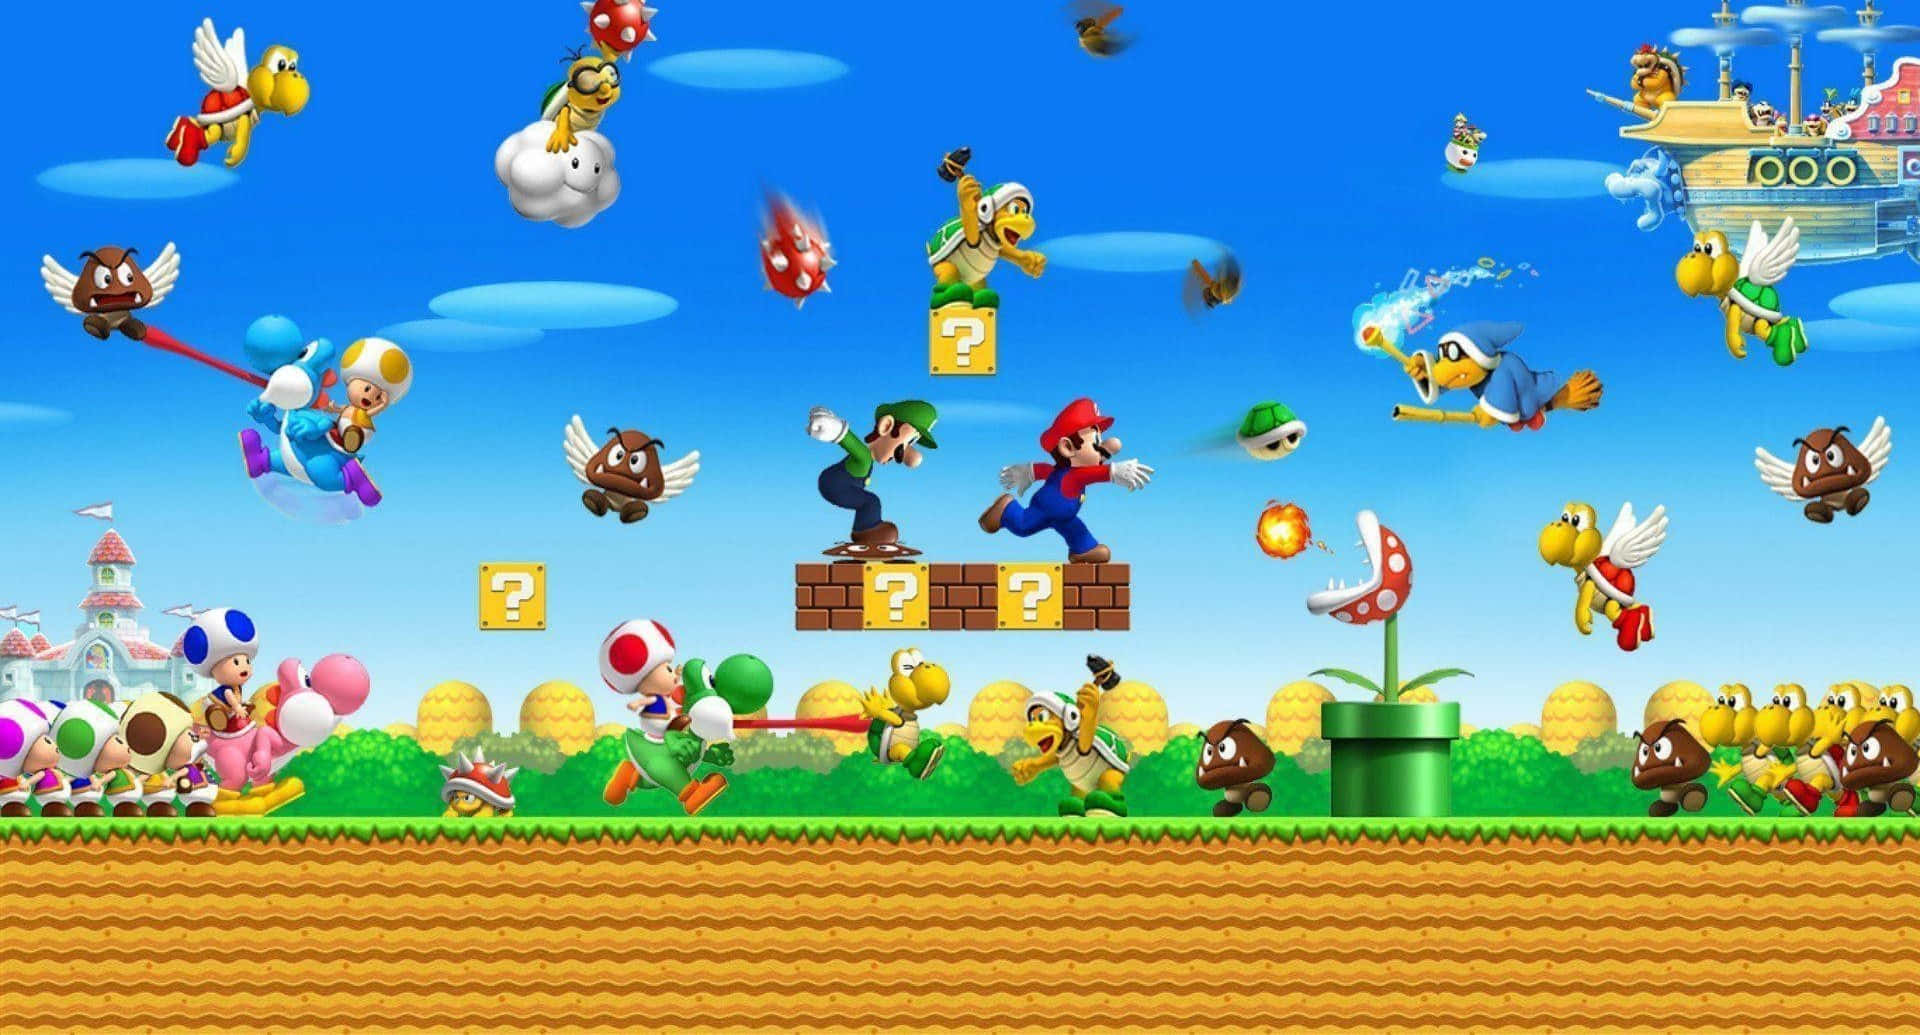 Jump into the world of Mario Bros!